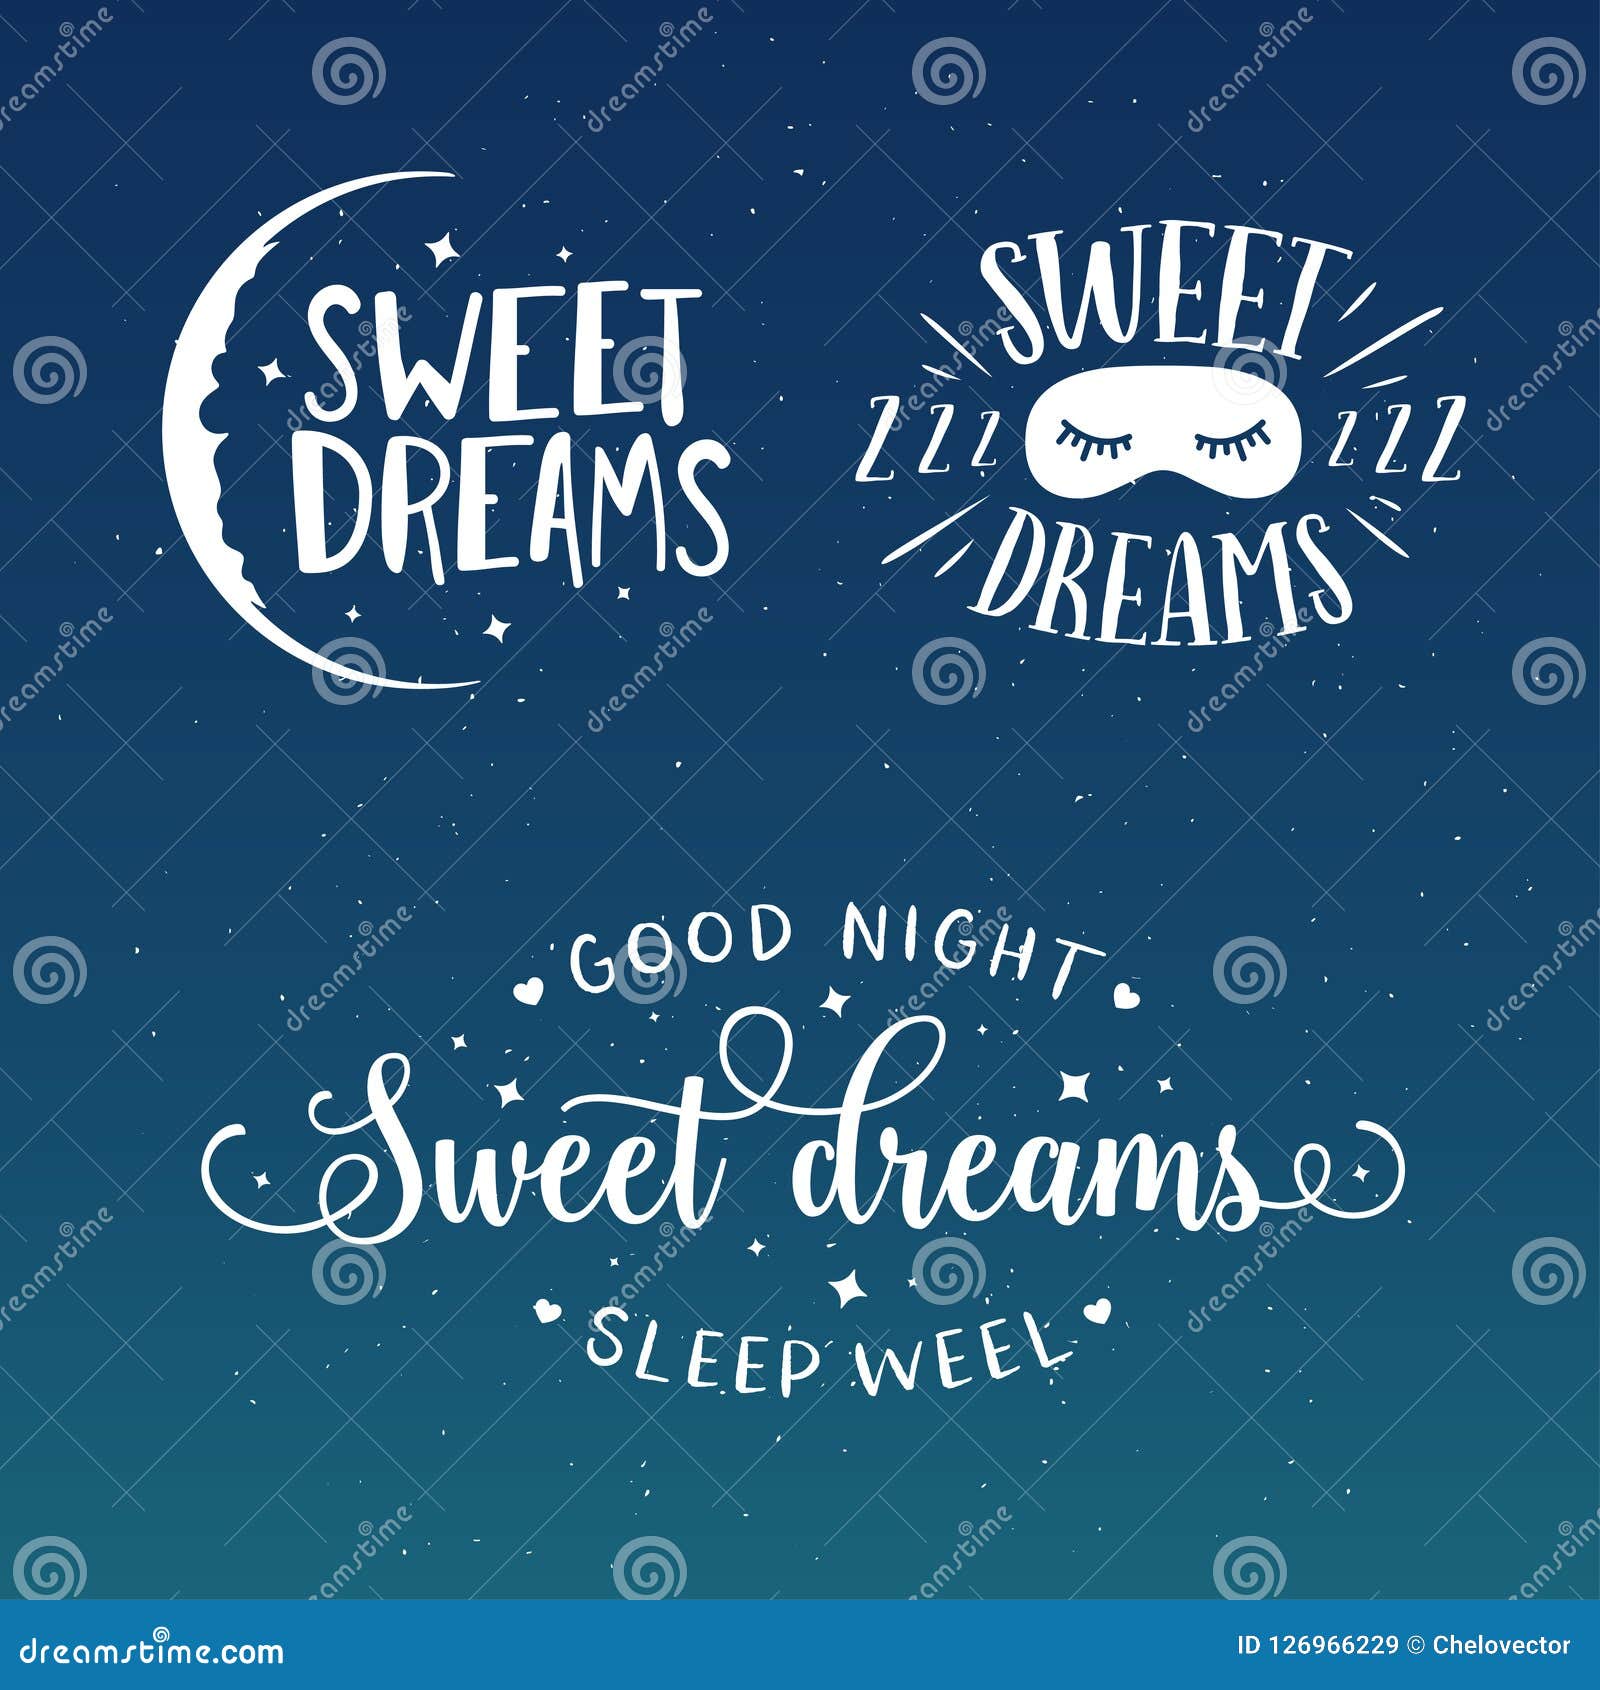 https://thumbs.dreamstime.com/z/sweet-dreams-good-night-typography-set-vector-vintage-illustration-sweet-dreams-good-night-typography-set-sleeping-related-126966229.jpg